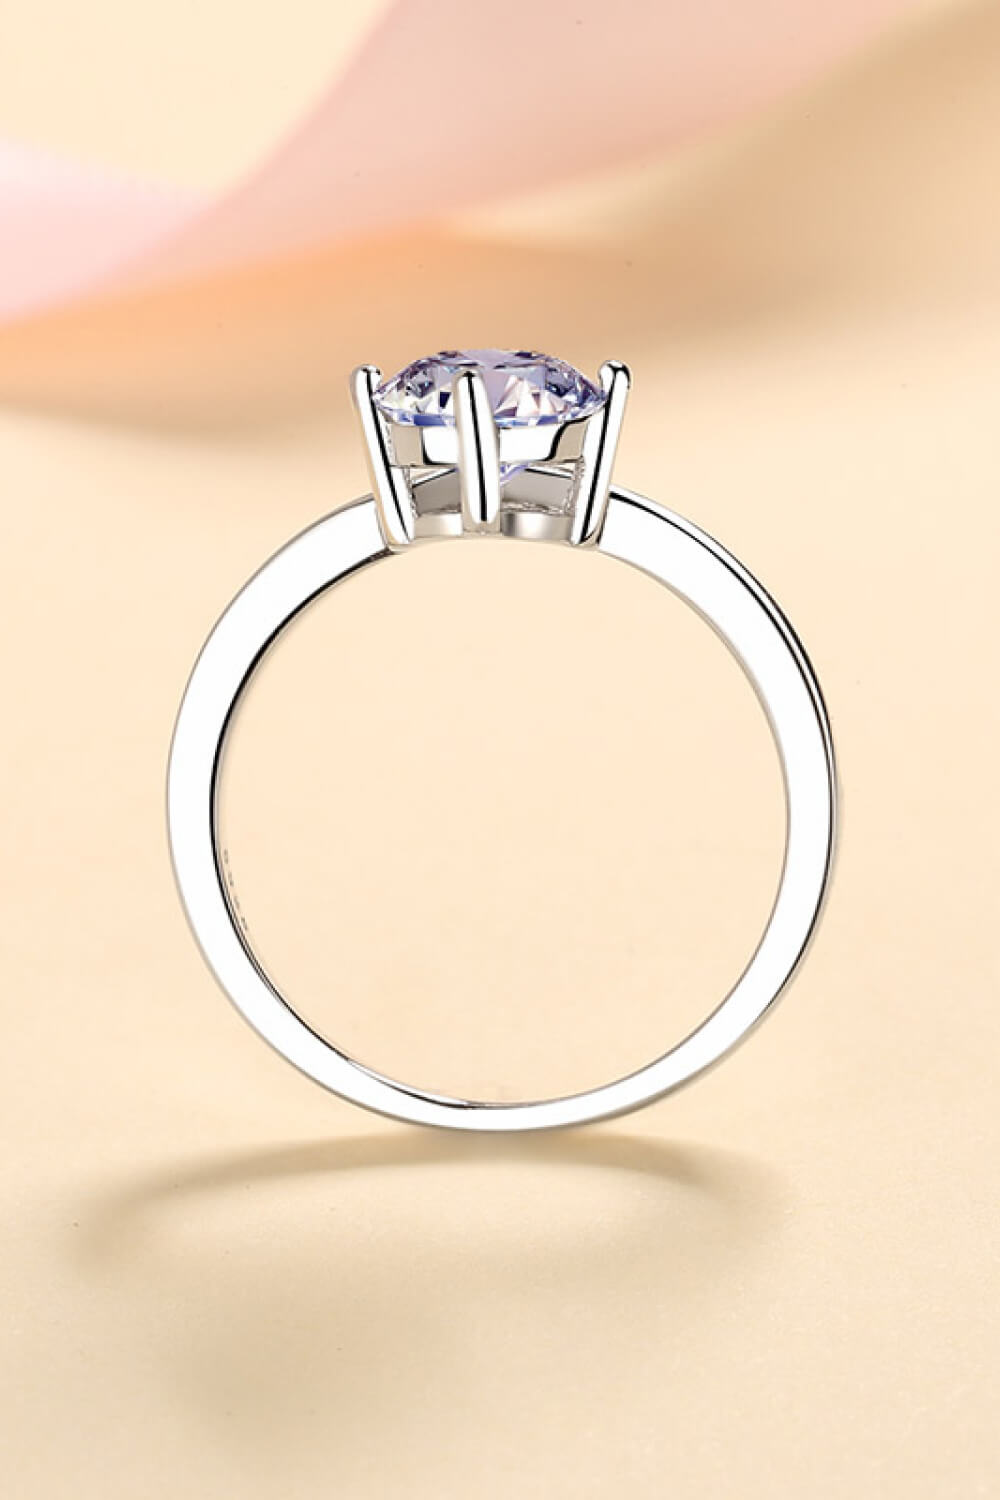 Sterling Silver Moissanite Ring Image2